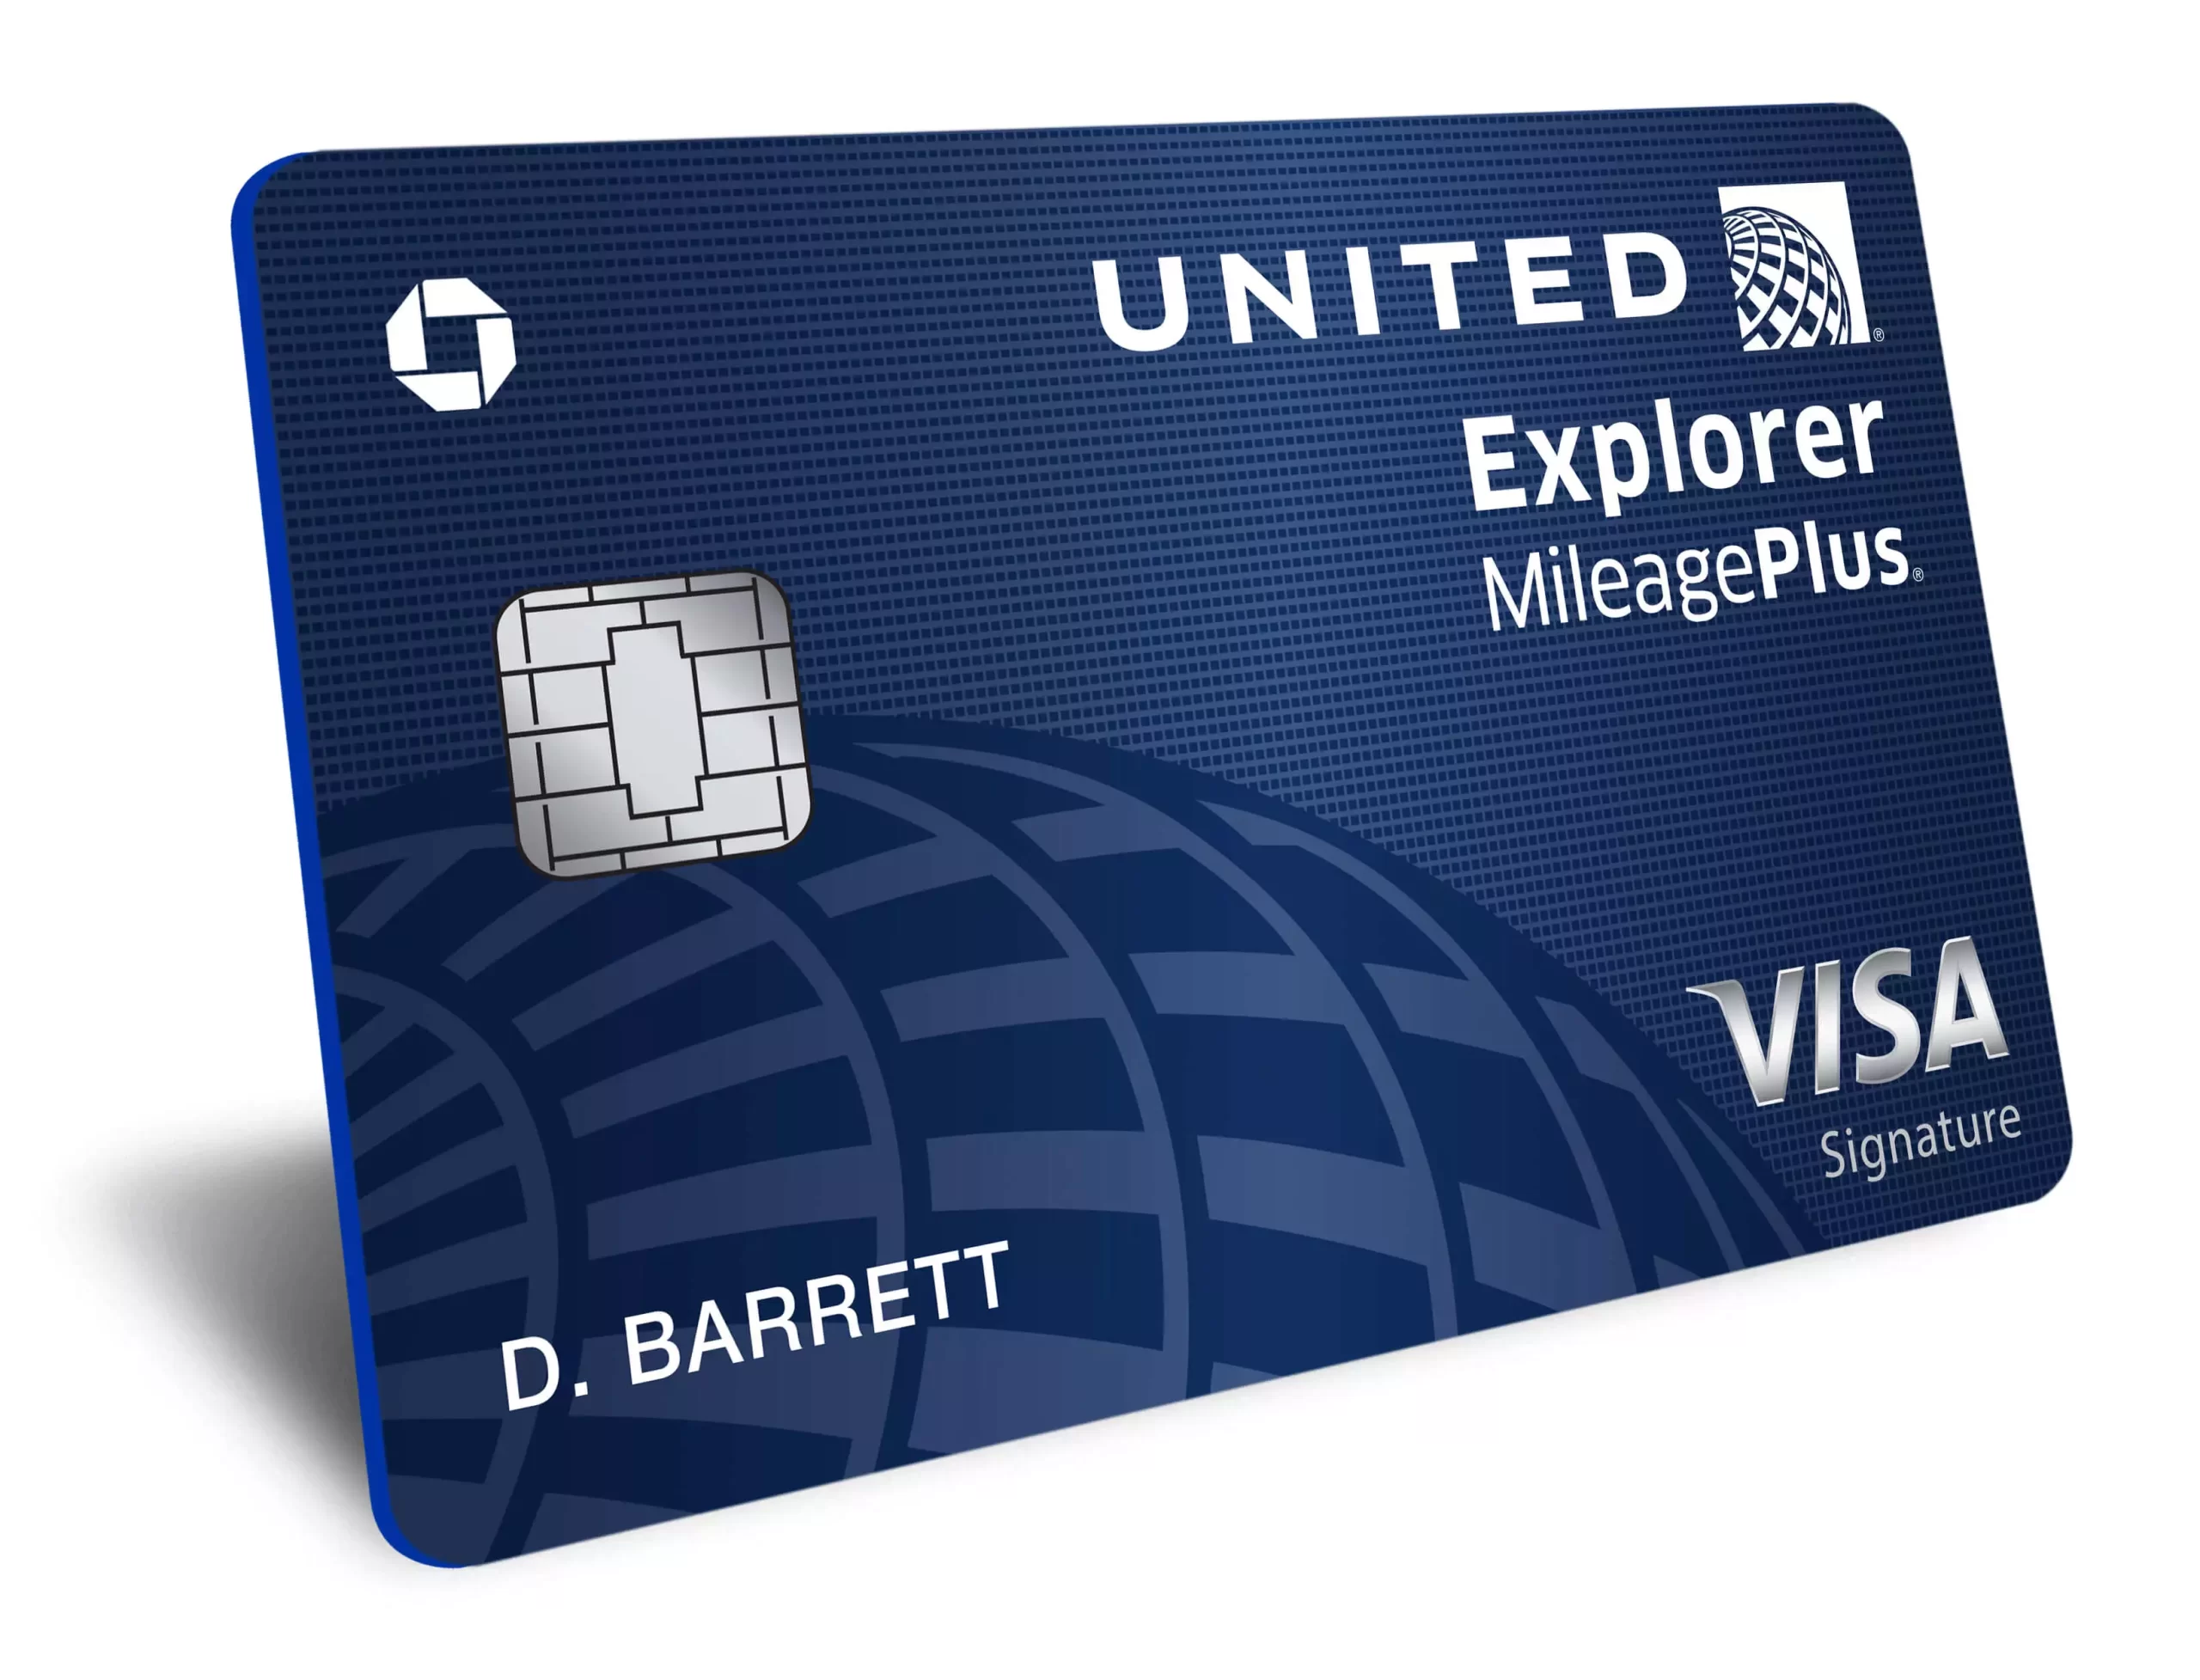 United-Explorer-Card